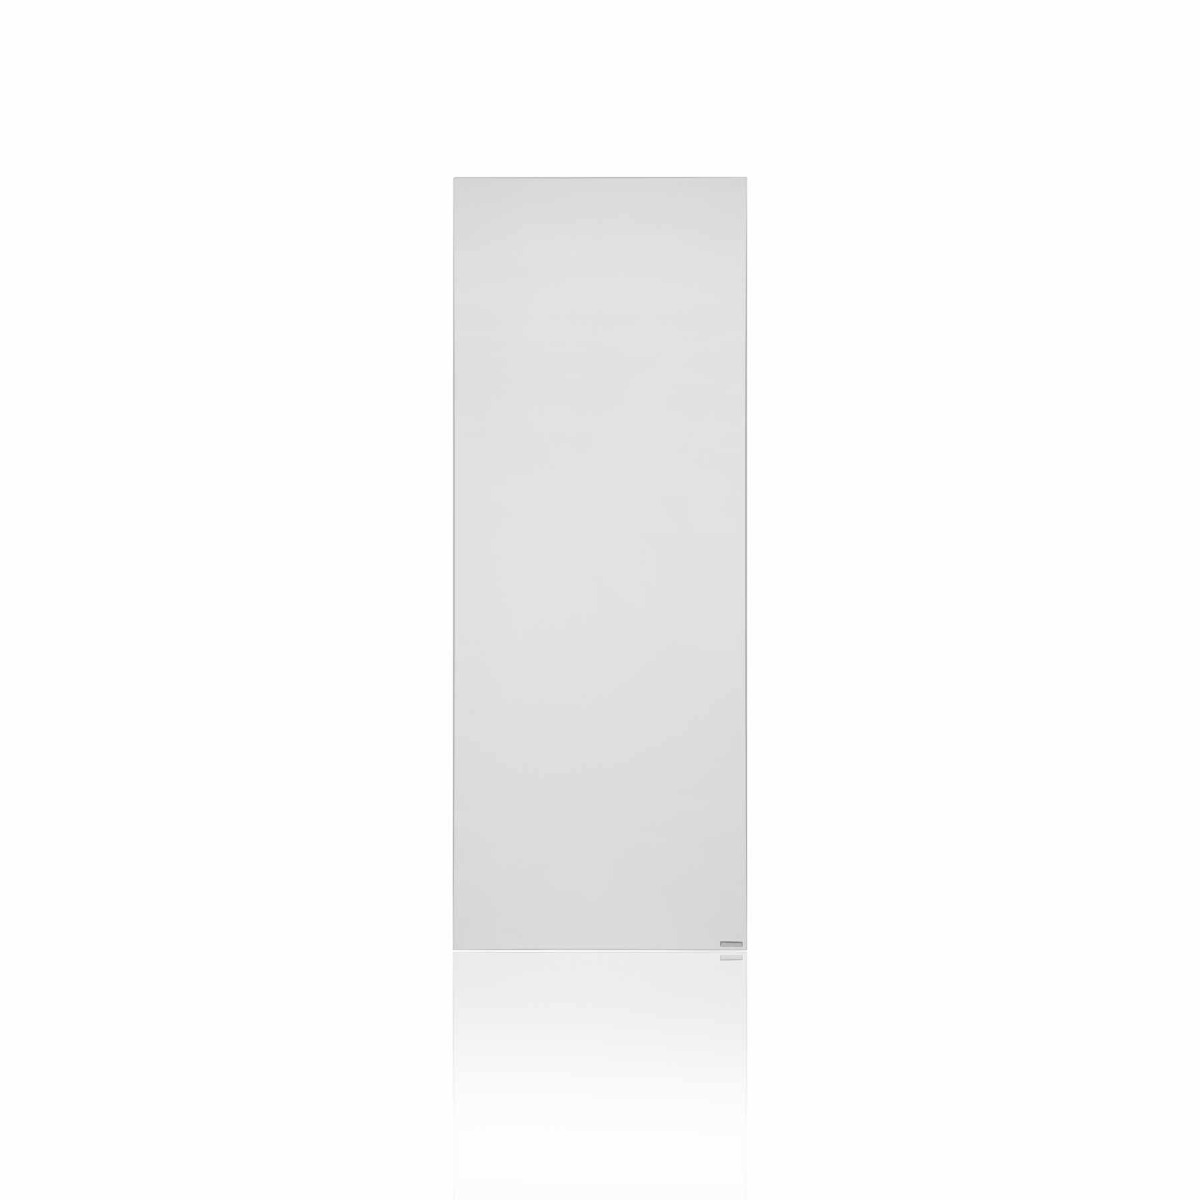 Herschel Select XLS Infrared Heating Panel - White 1100w (600 x 1550mm)